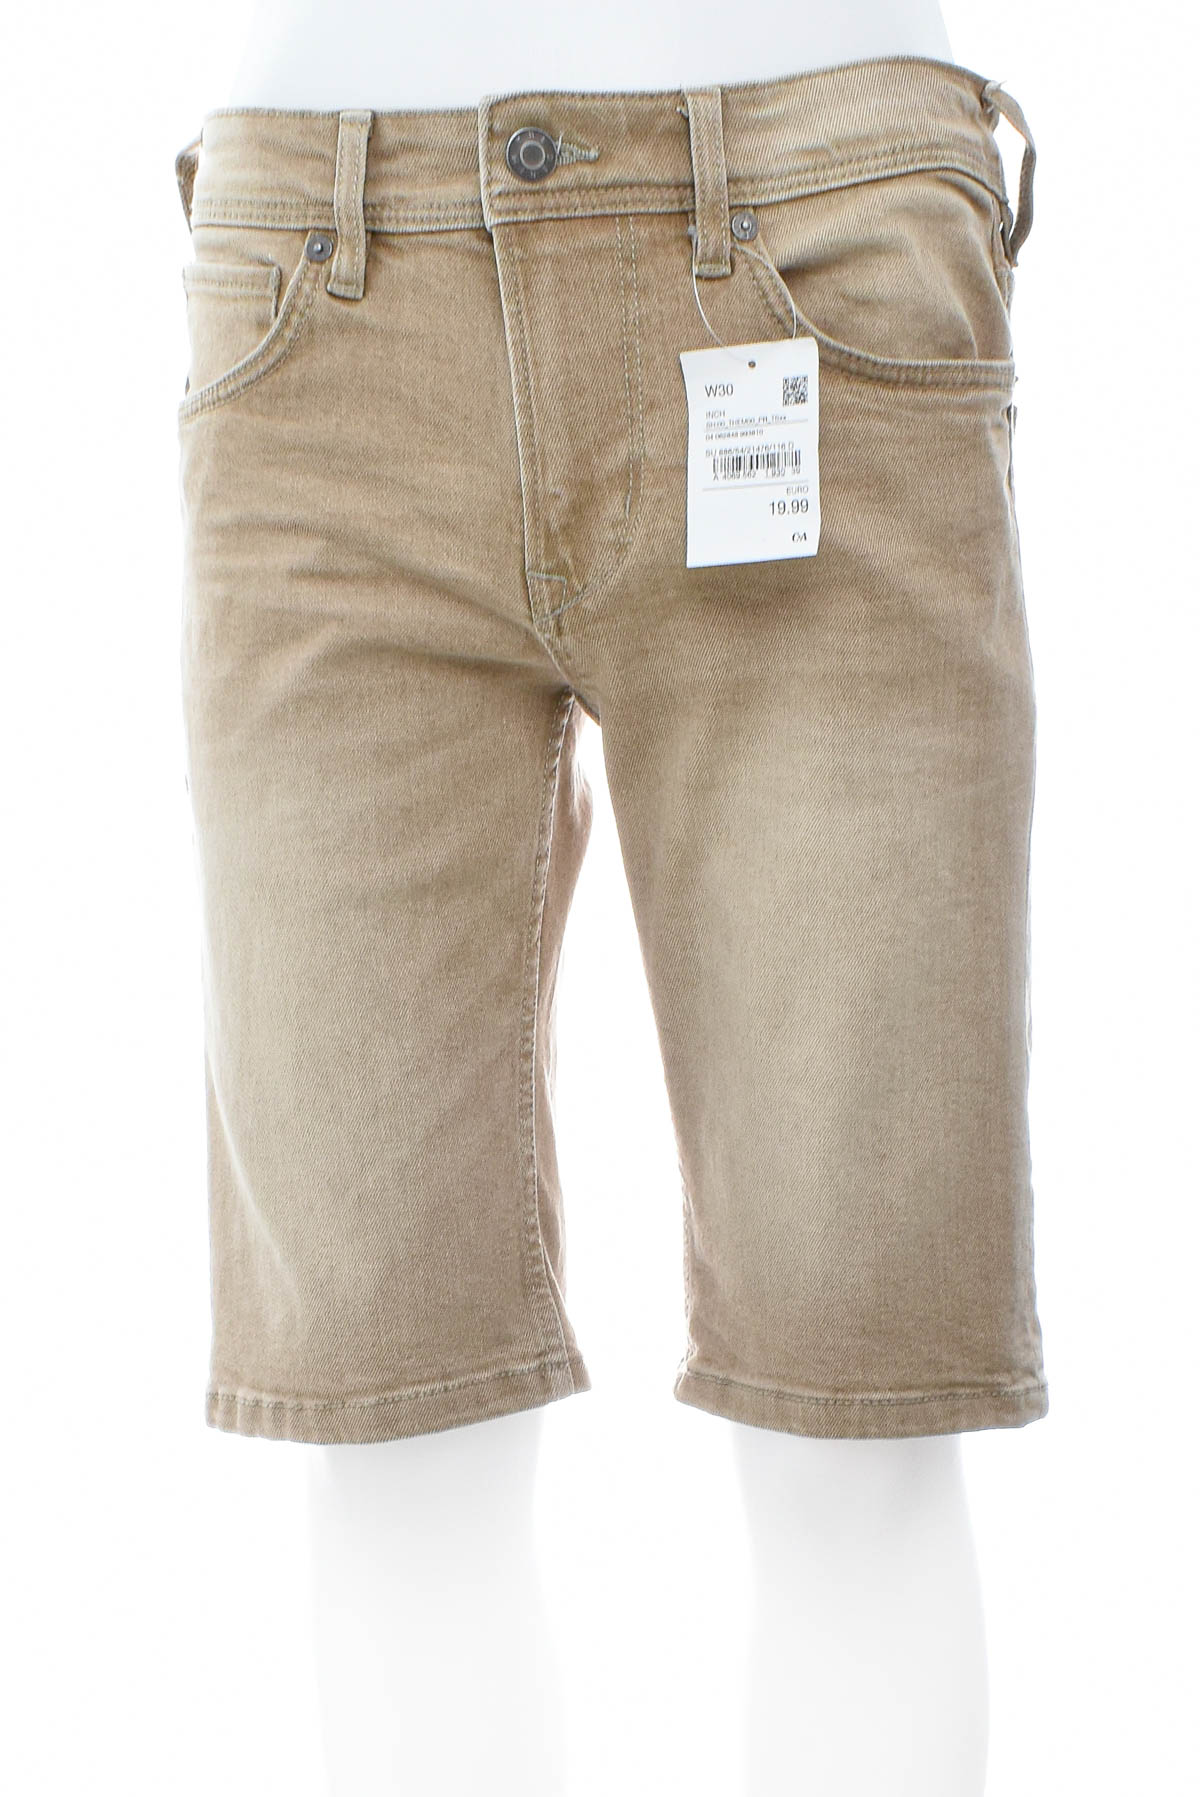 Pantaloni scurți bărbați - C&A - 0